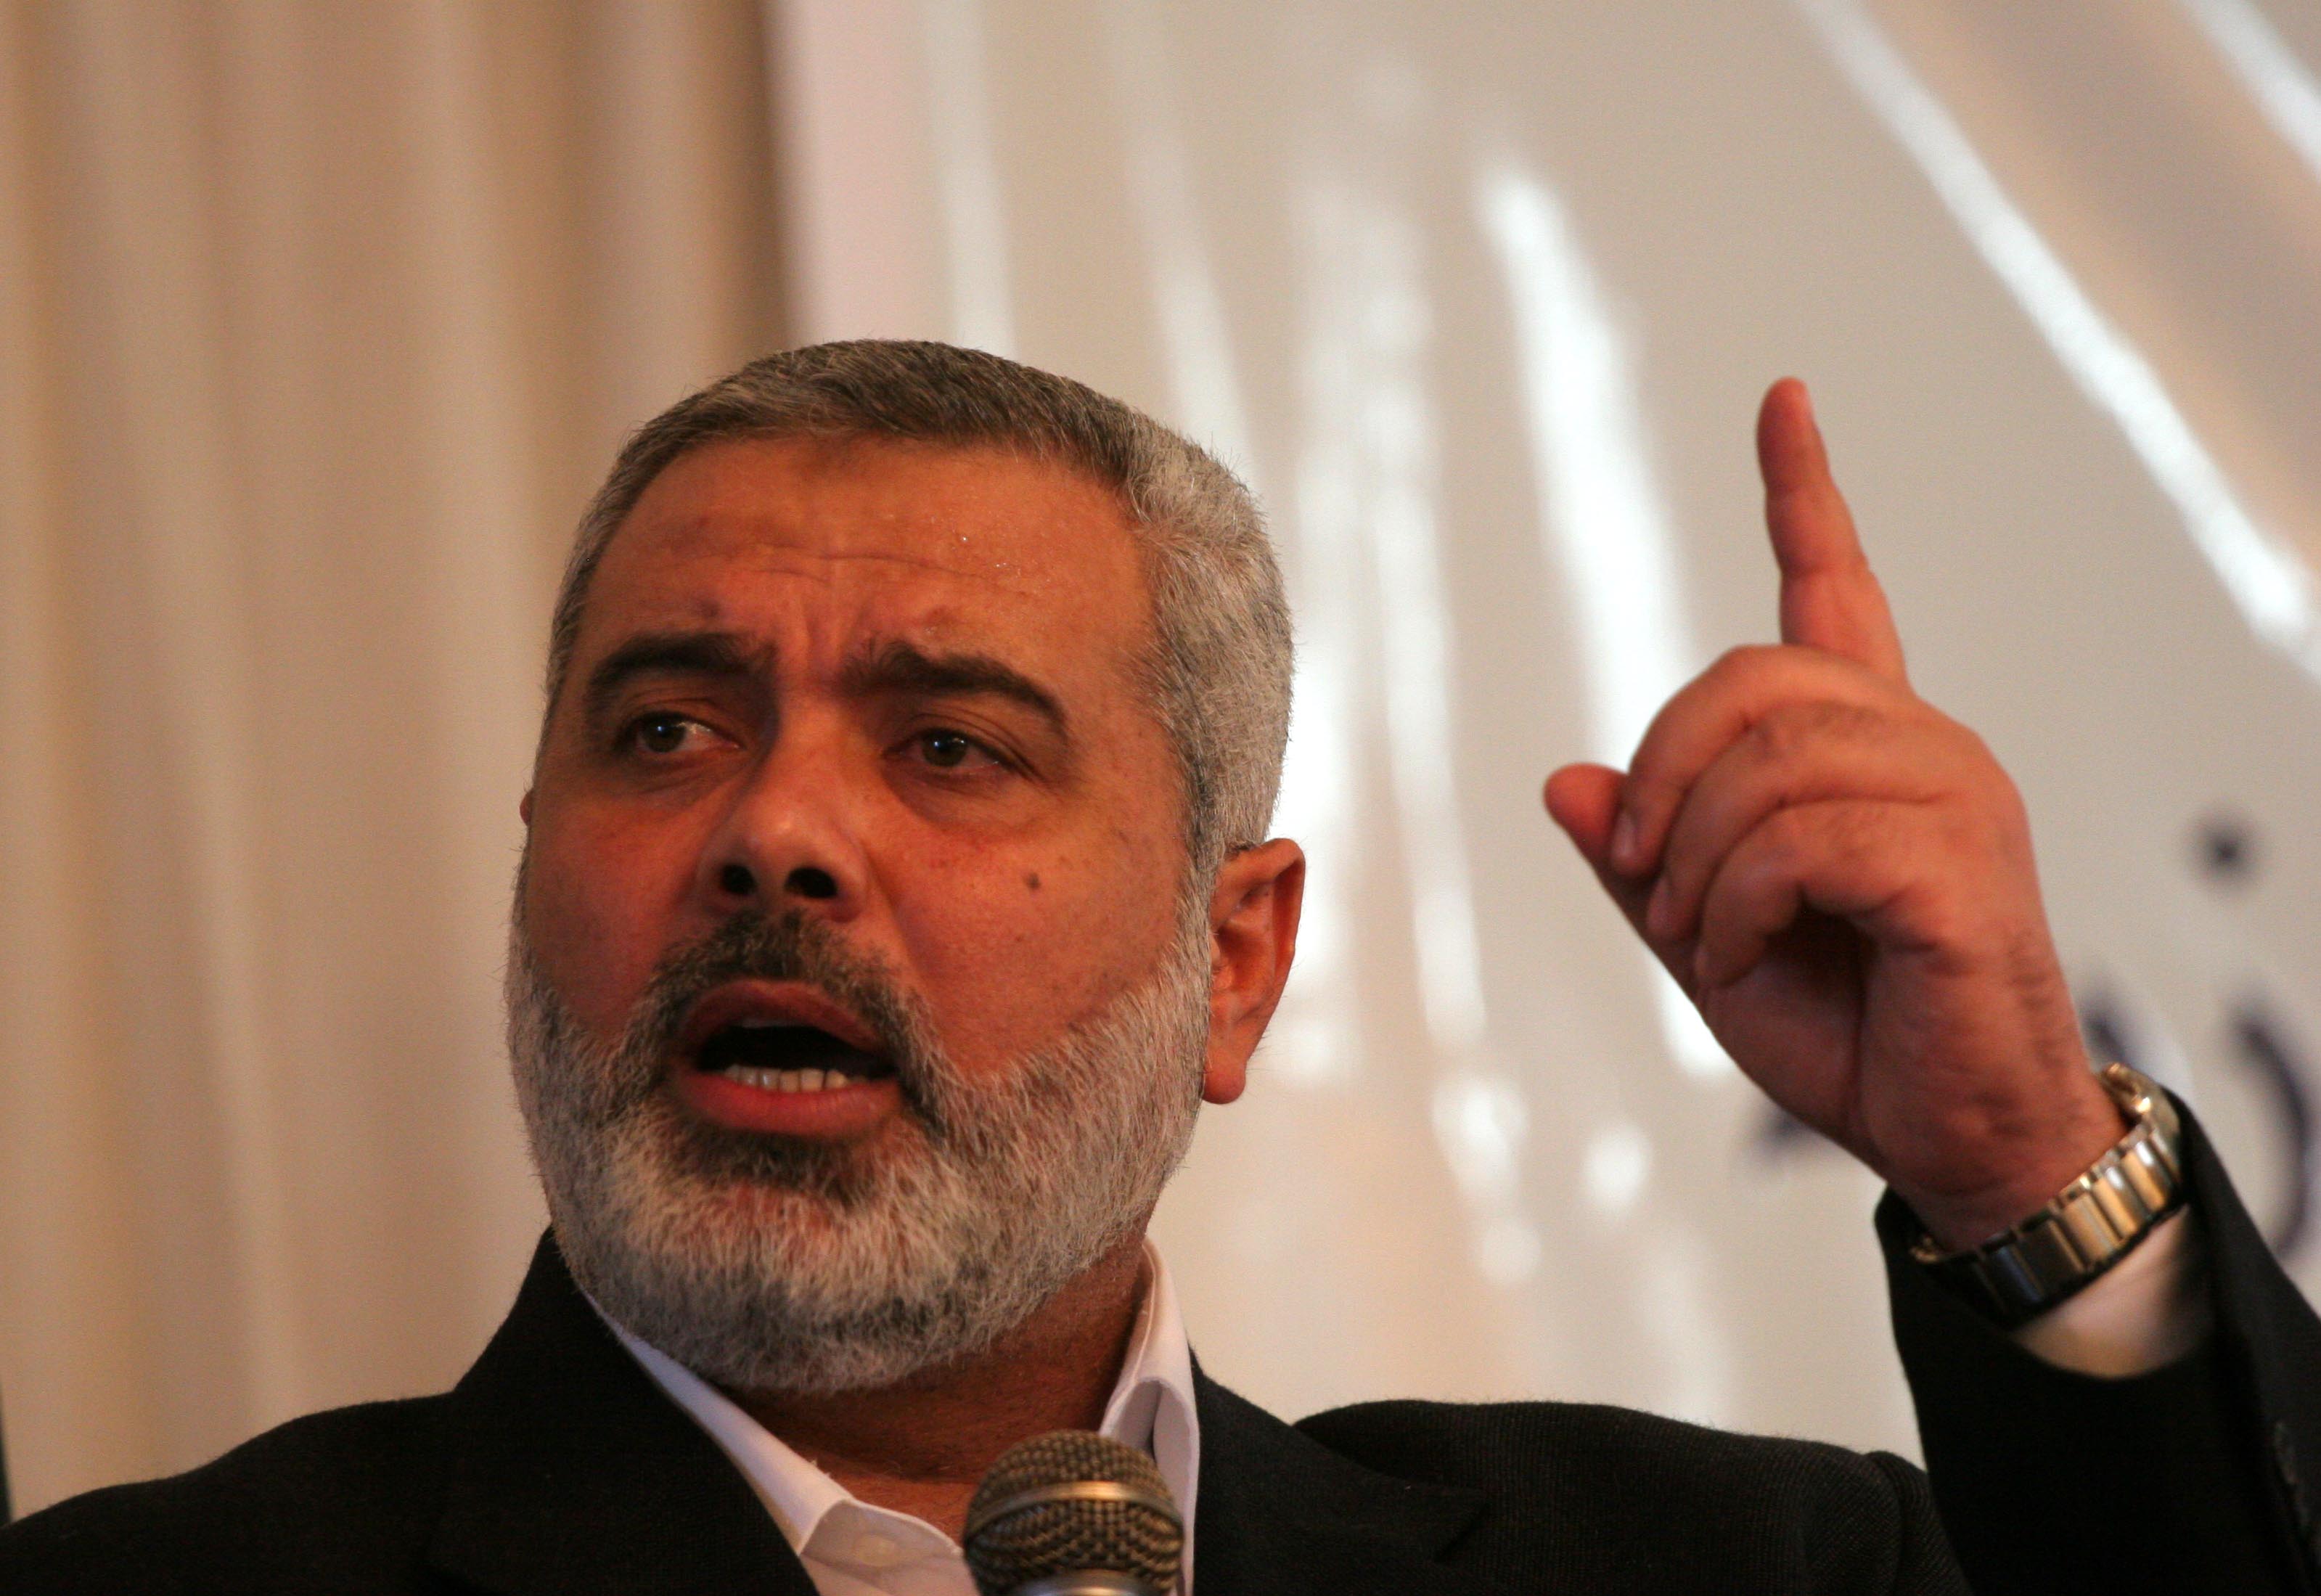 Photo of Hamas’s Haniyeh Warns Netanyahu against “Adventure” ahead of Elections